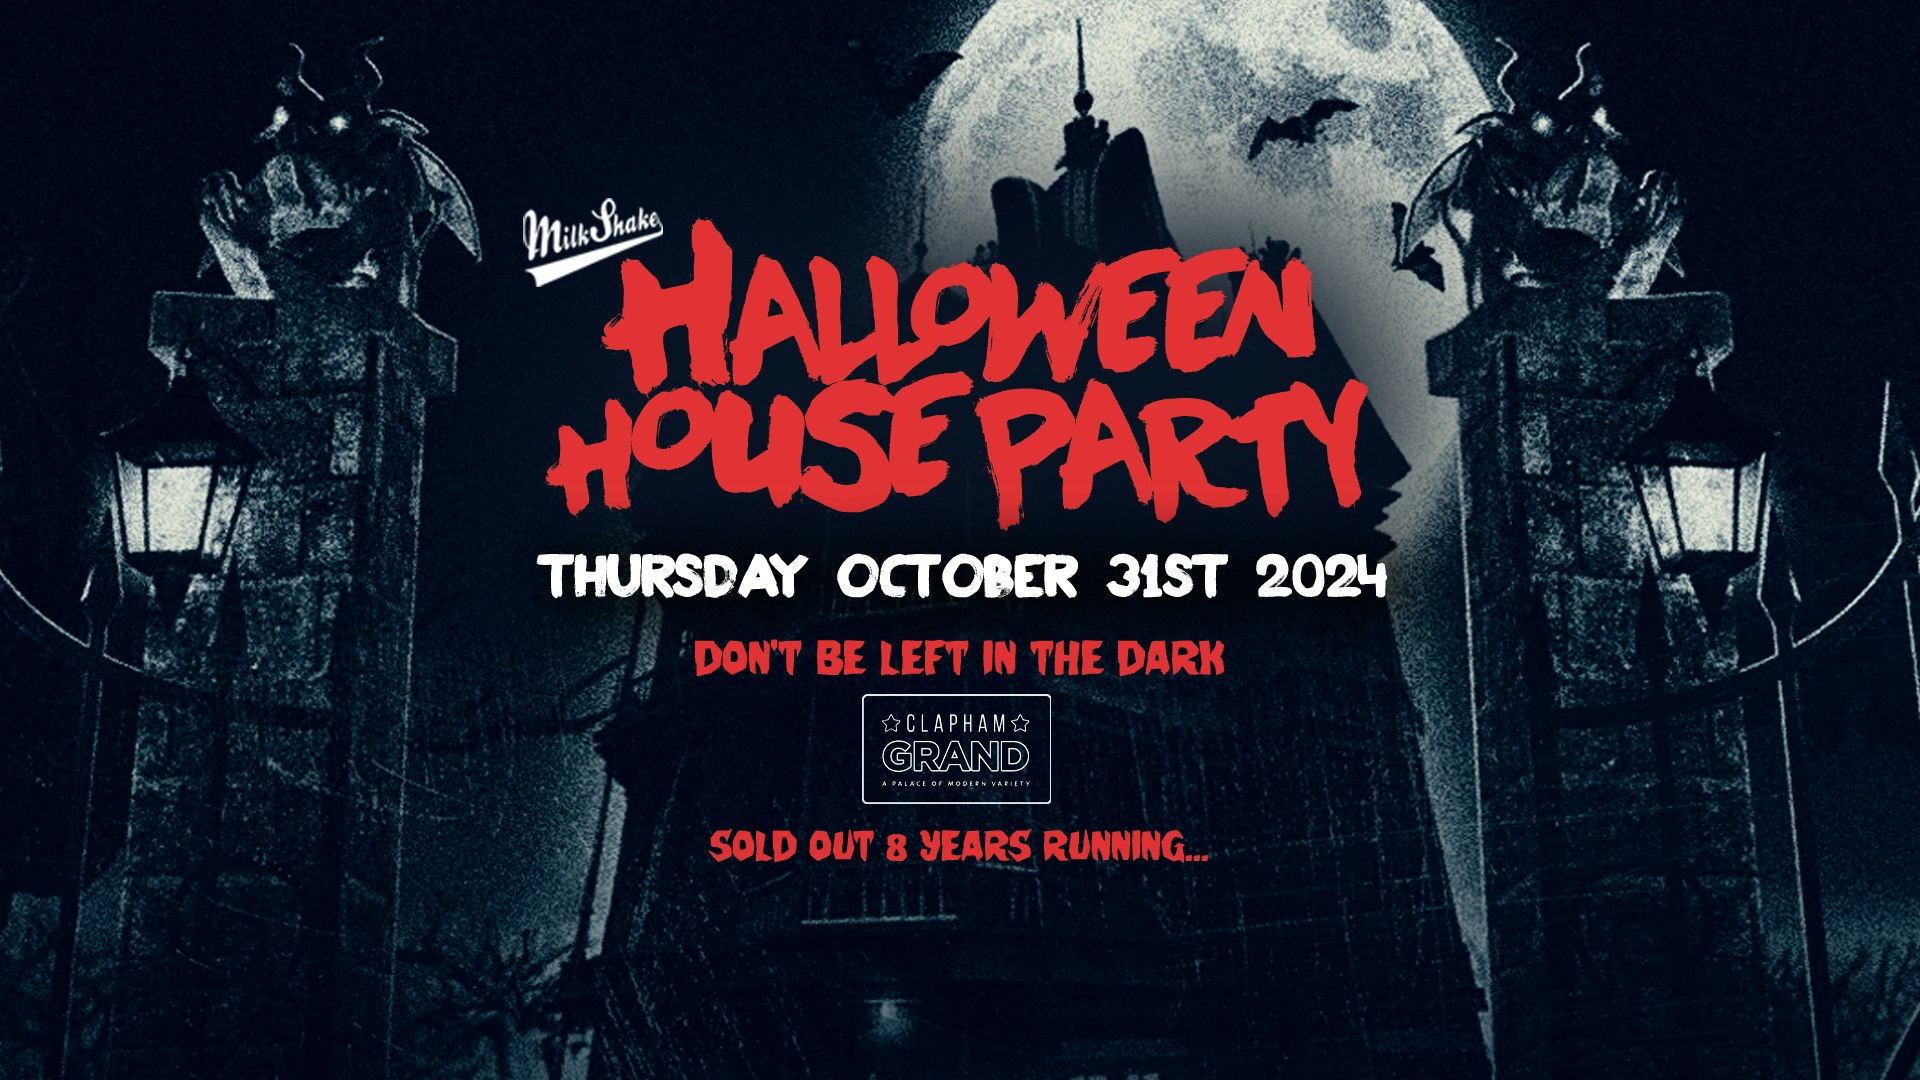 Milkshake Halloween Haunted House Party 2024 – The Clapham Grand 👻 BOOK NOW  👻